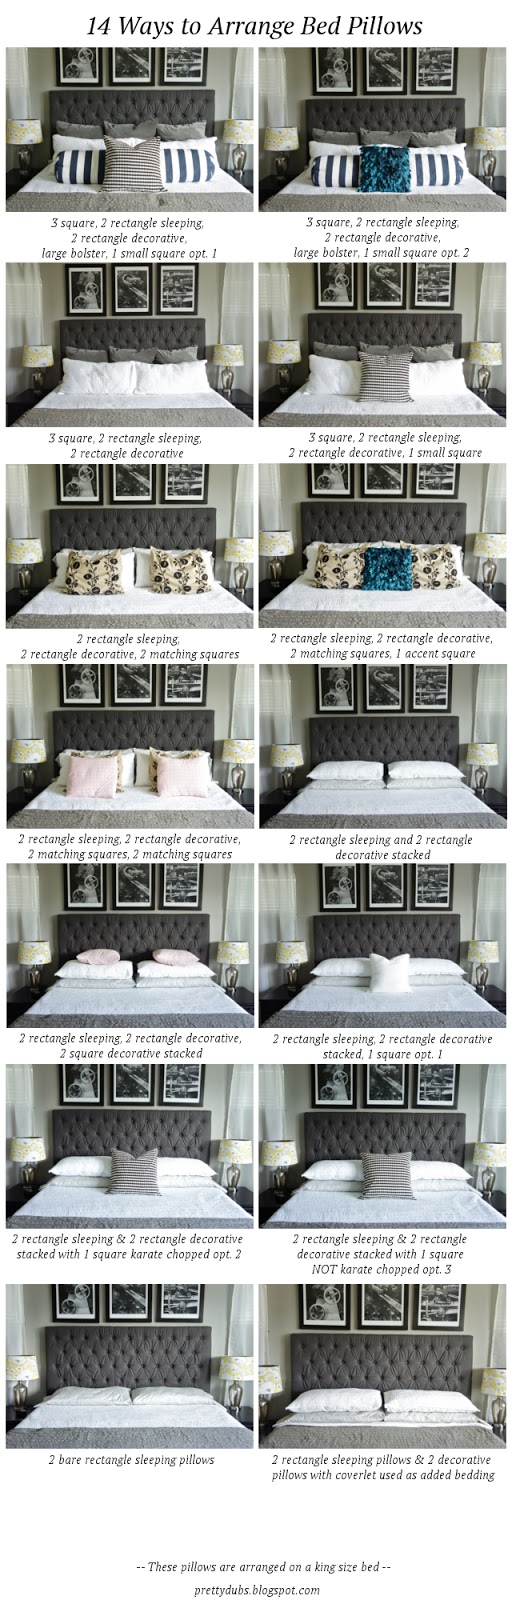 http://1.bp.blogspot.com/-mdyiPW336kI/U4gk0Bs1E6I/AAAAAAAAXWc/37LyF8GniXw/s1600/14+ways+to+arrange+bed+pillows3.jpeg